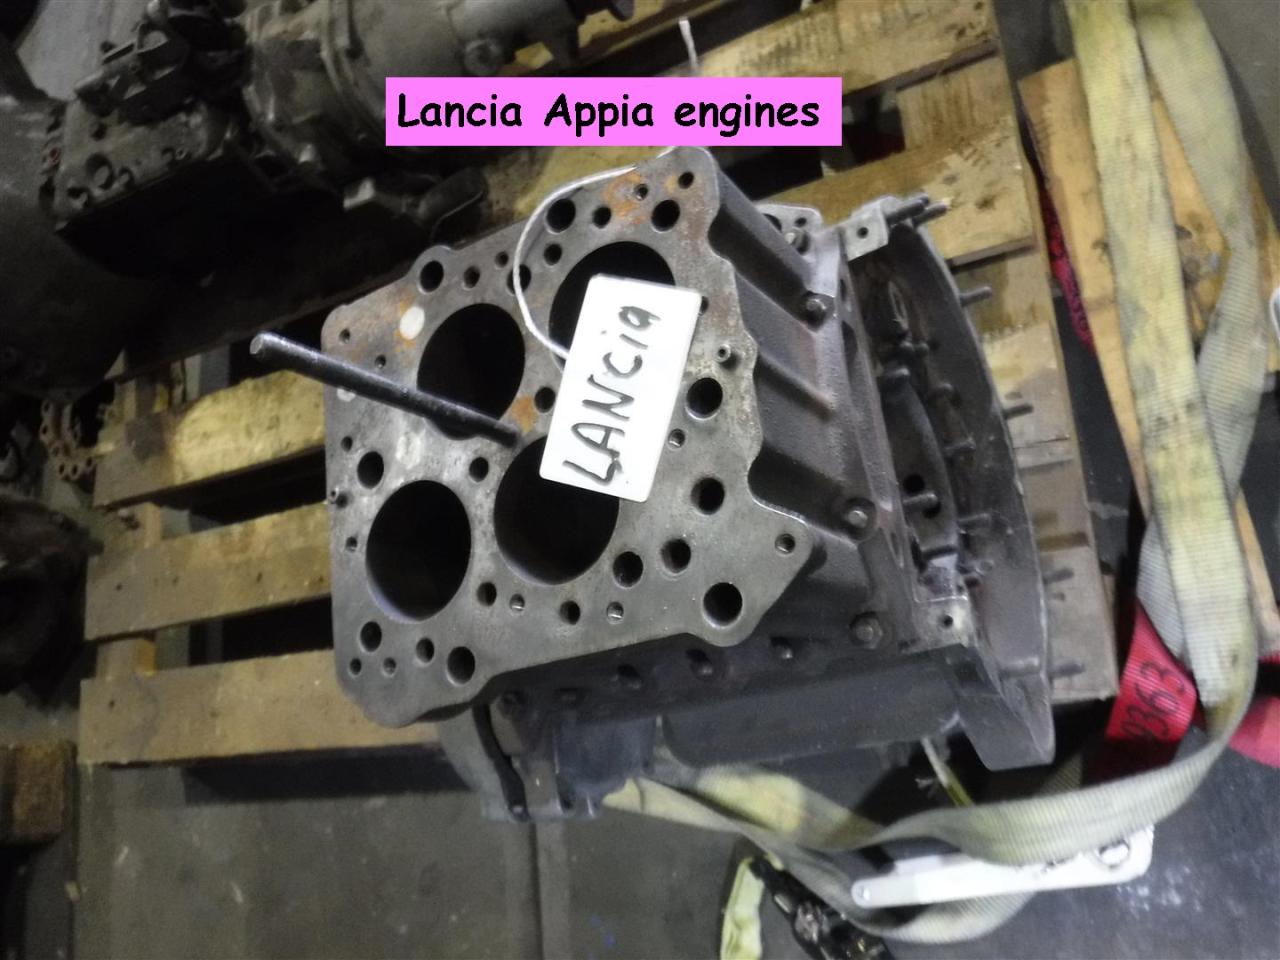 1900 Lancia appia engines